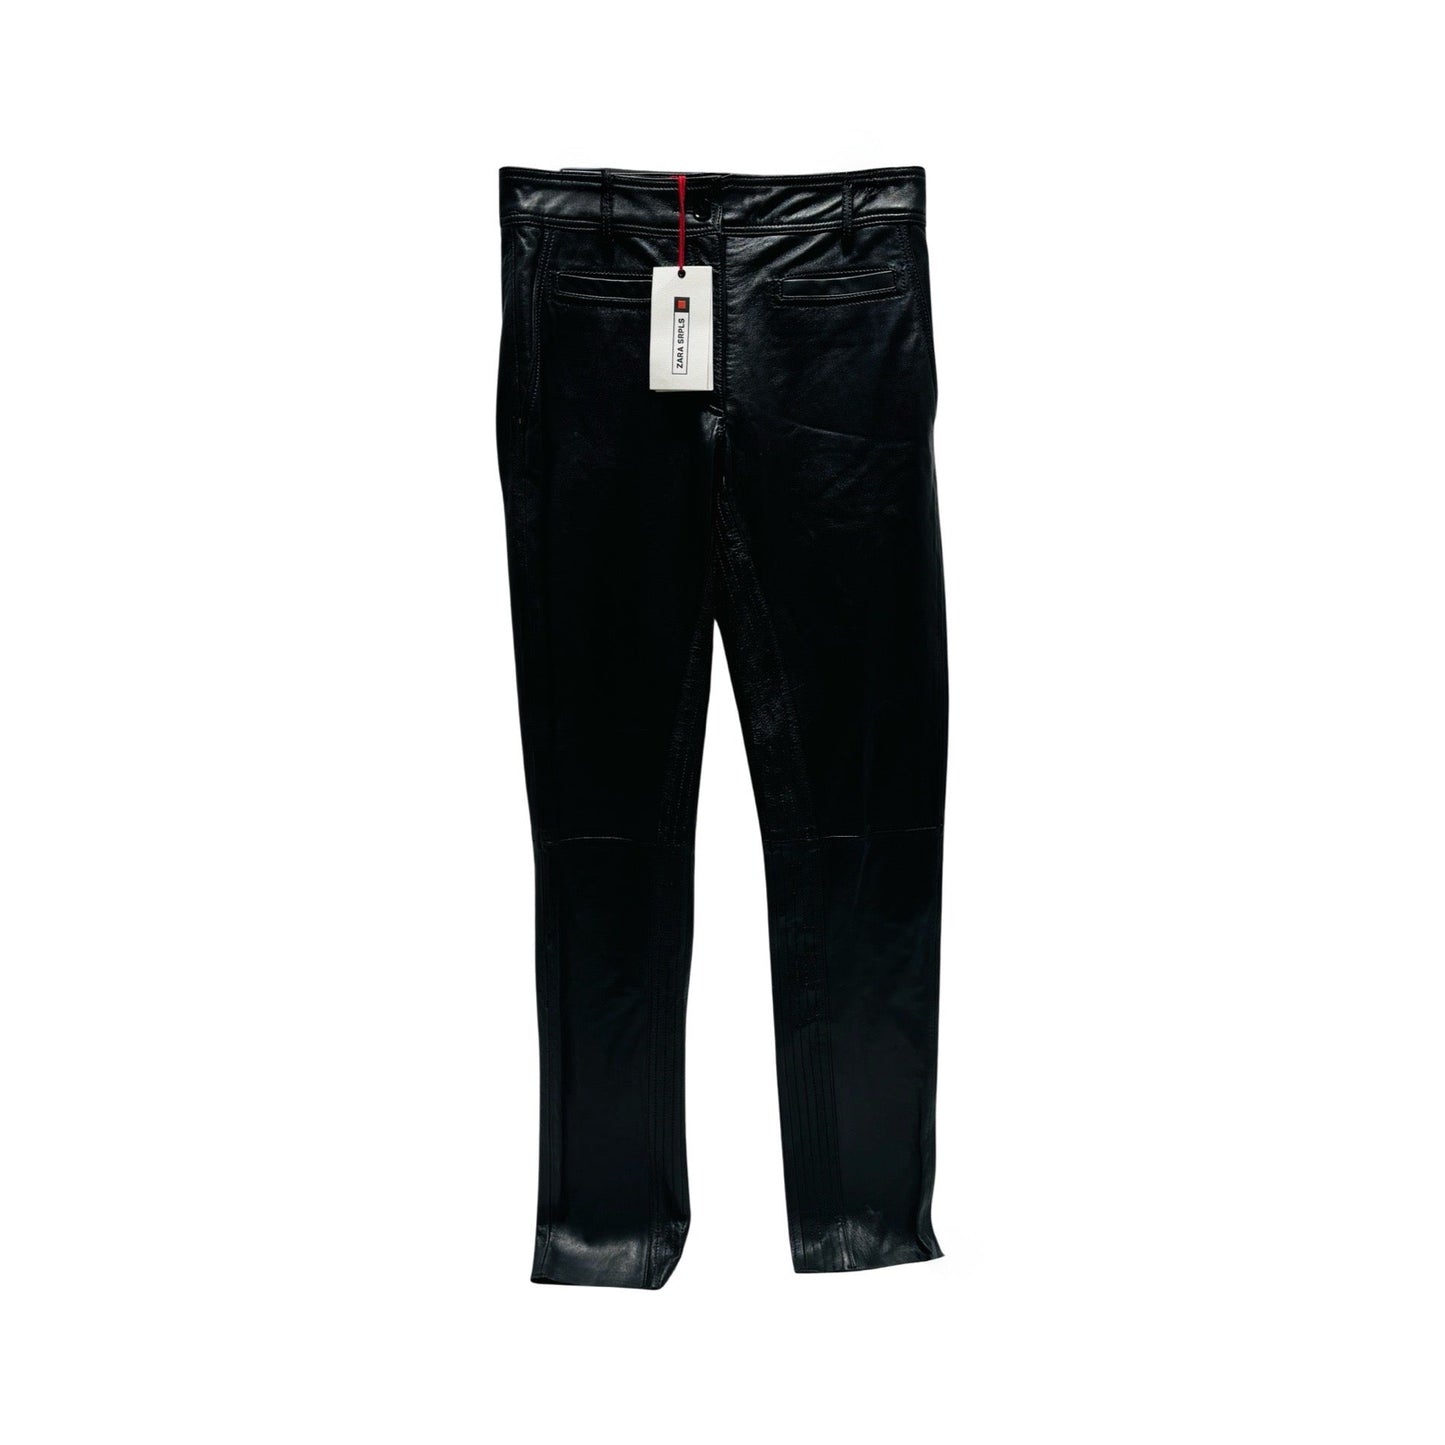 NWT Leather Black Pants By Zara  Size: S